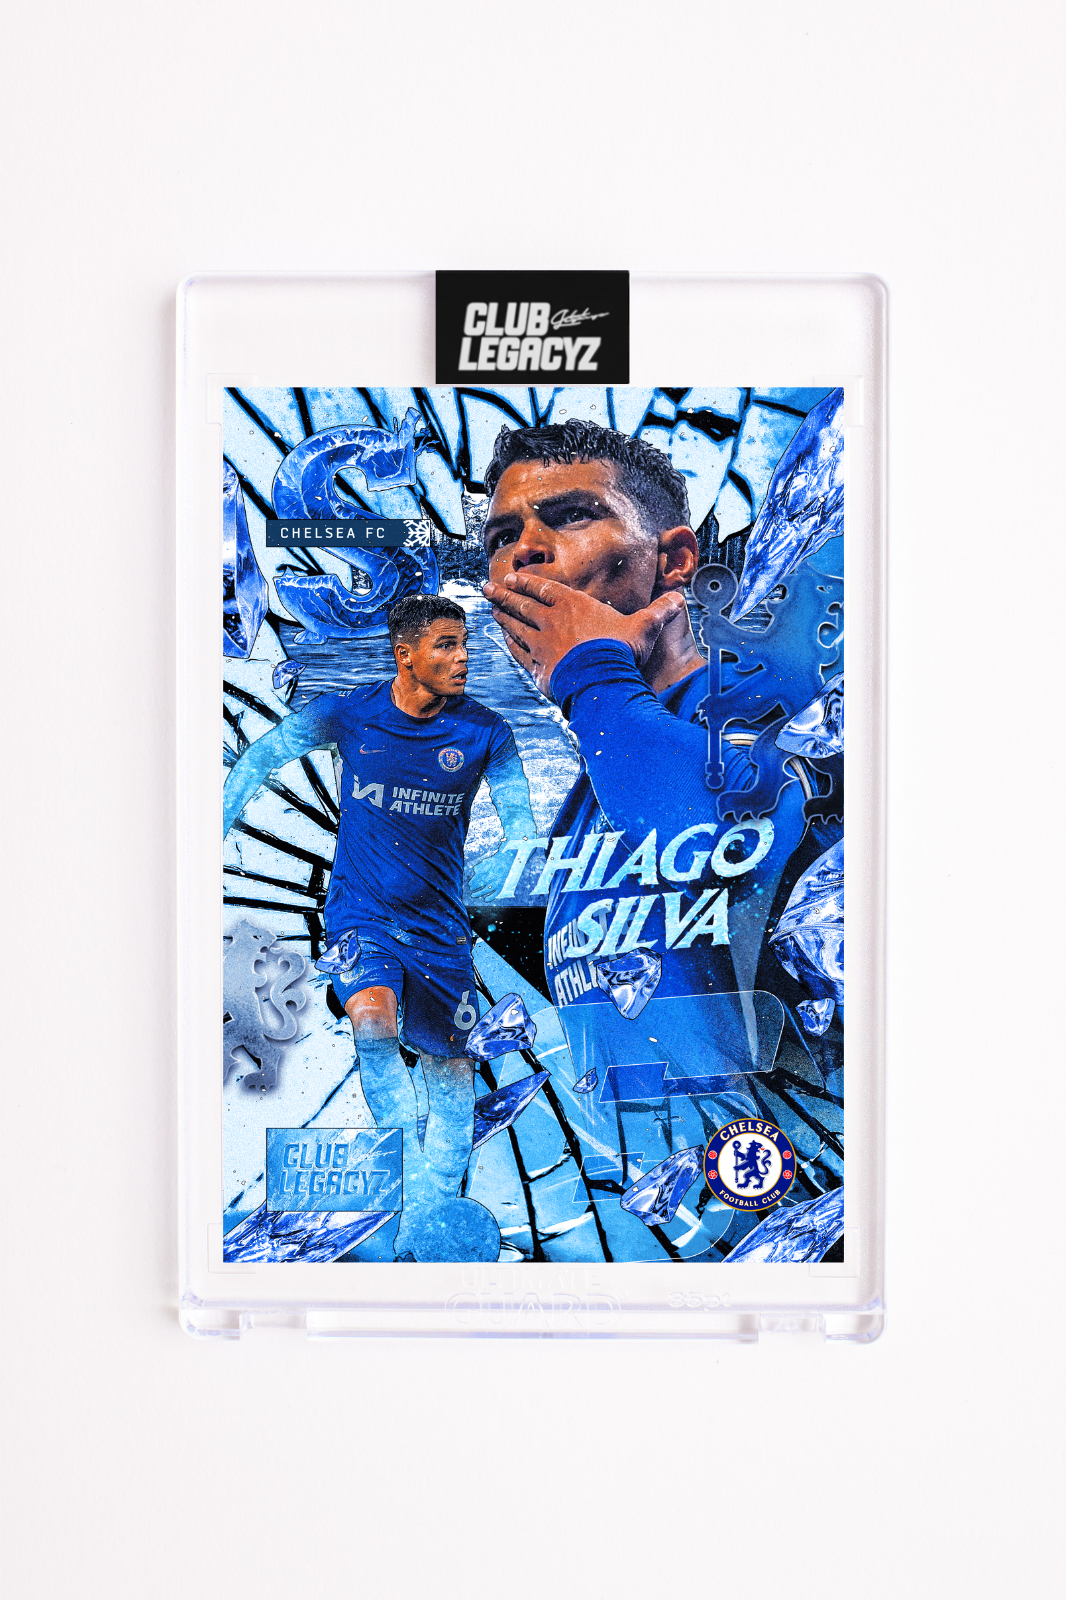 Chelsea FC - Icon Frozen Thiago Silva 100 exemplaires